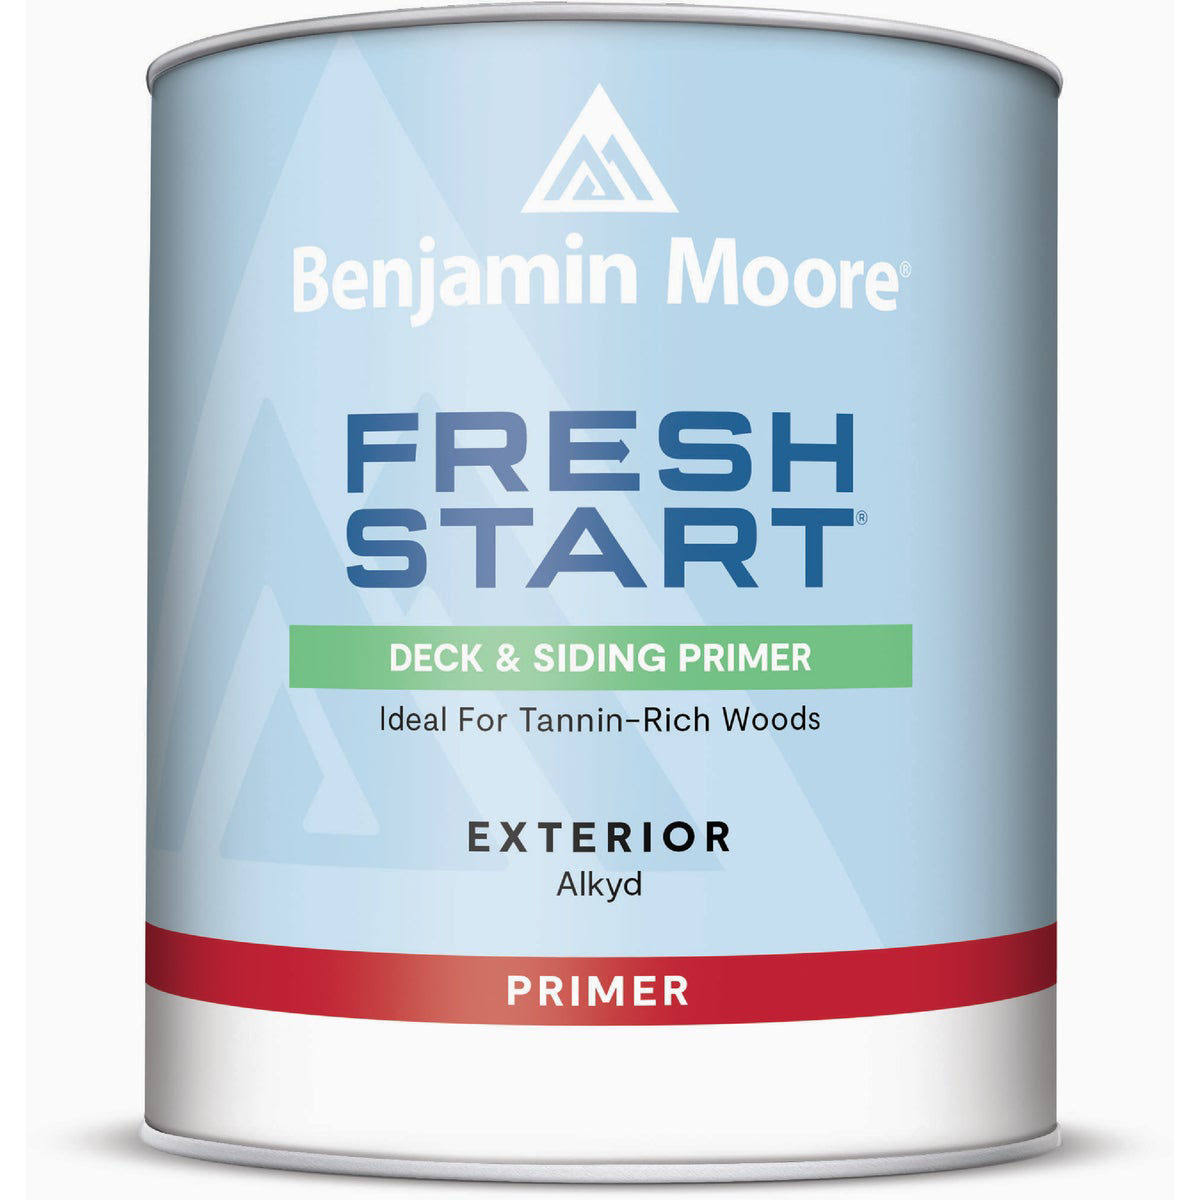 Benjamin Moore Exterior Wood Primer Primer (094) - Quart / White